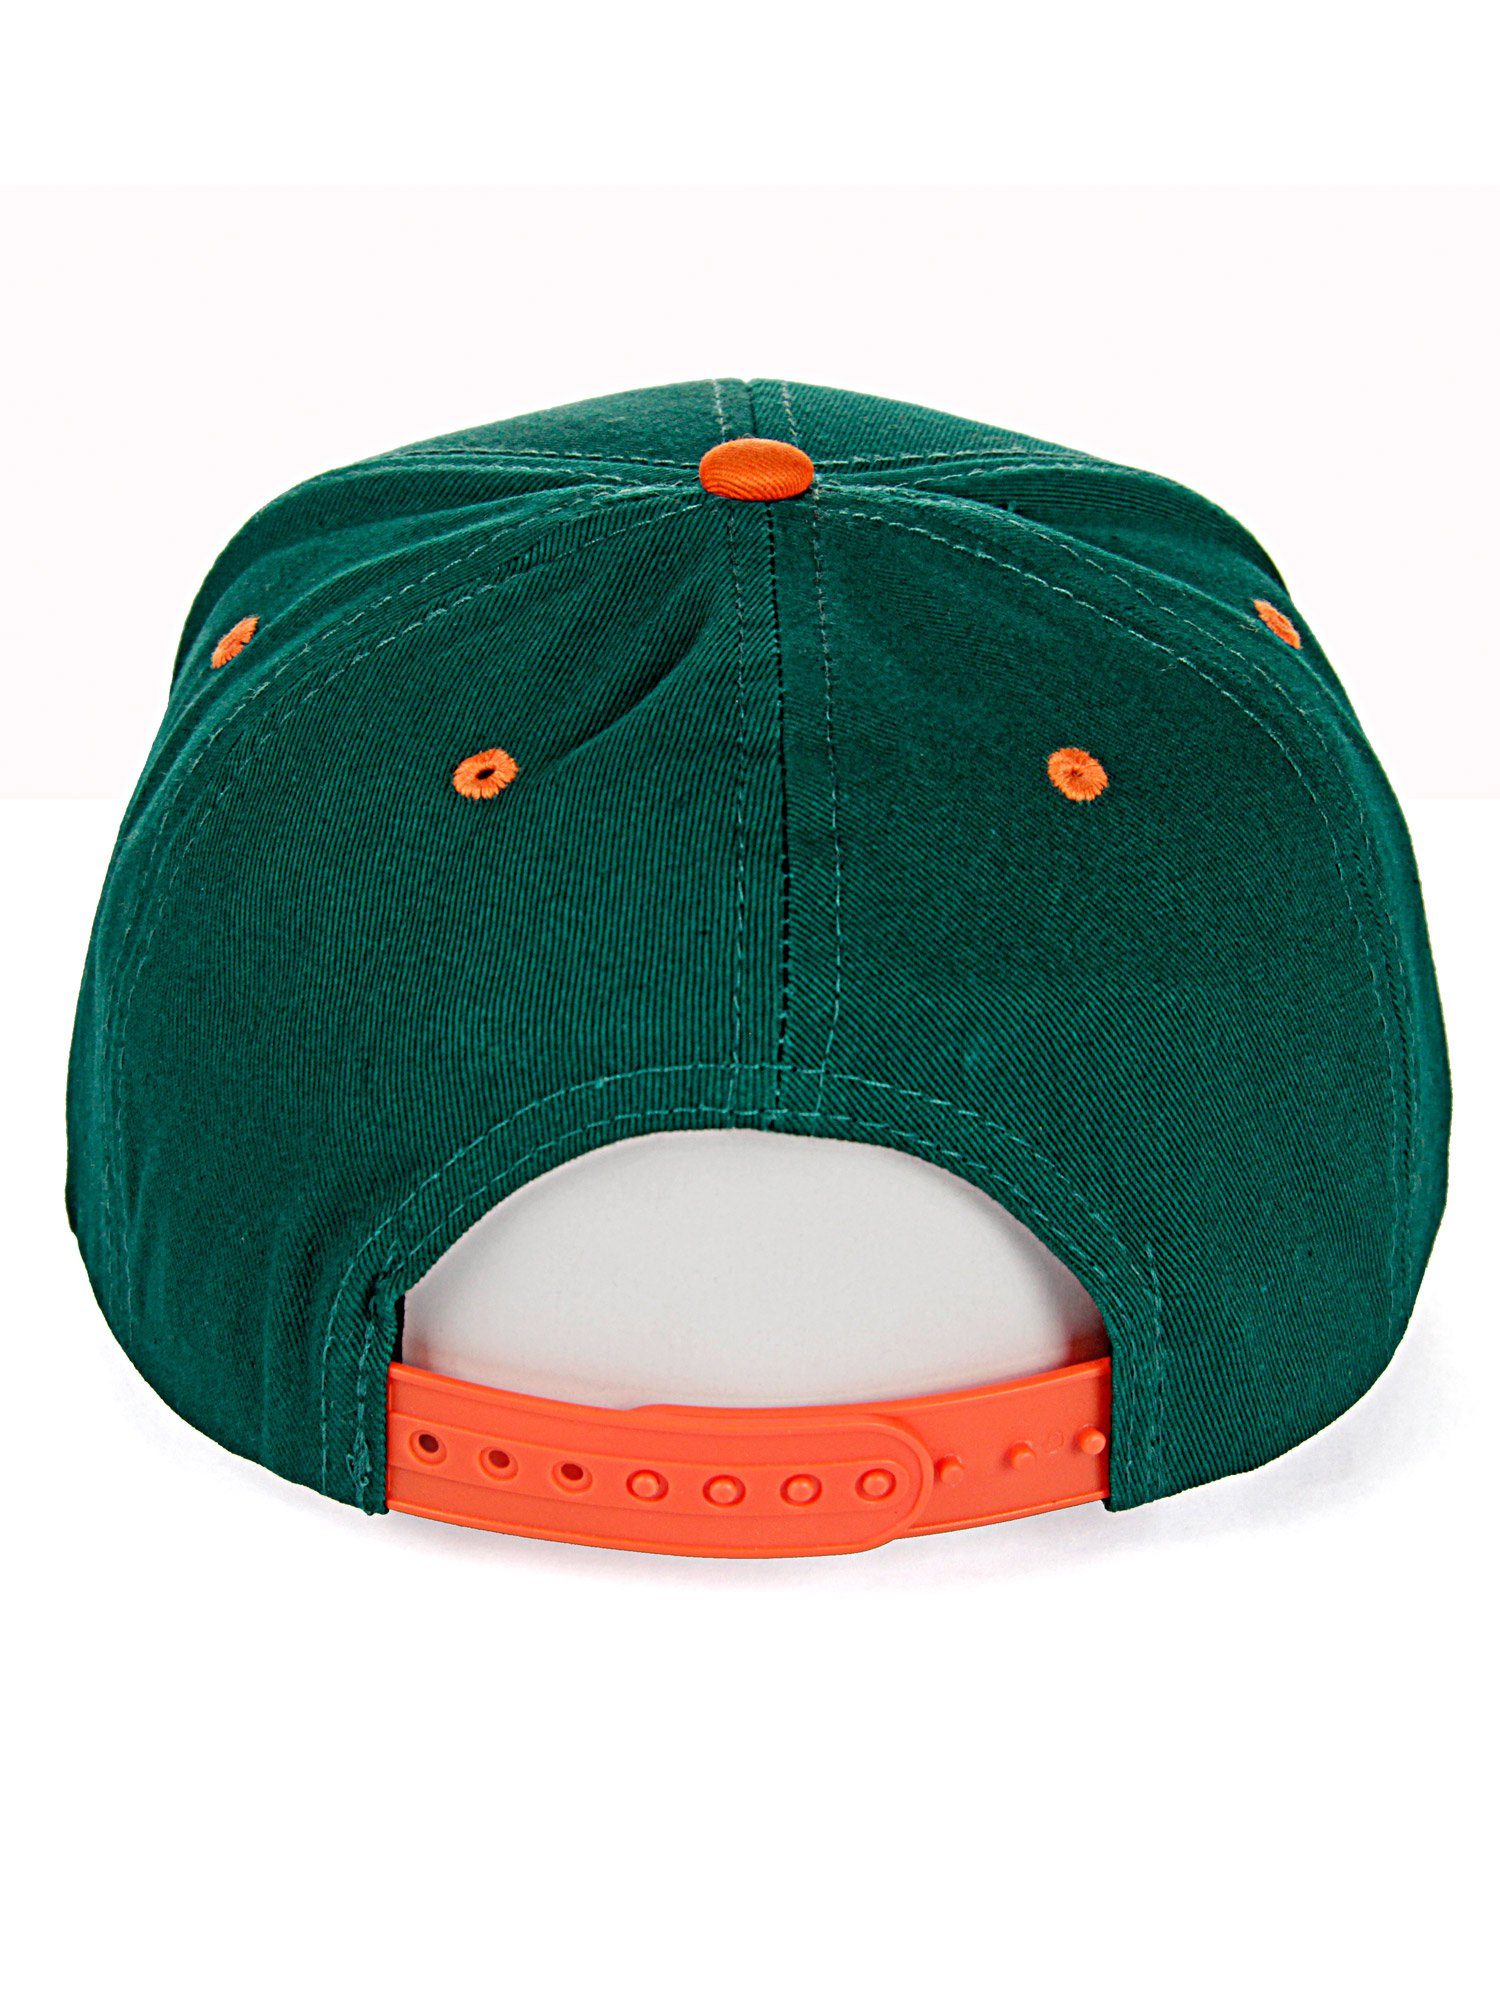 kontrastfarbigem grün-orange Sittingbourne Cap RedBridge Schirm mit Baseball